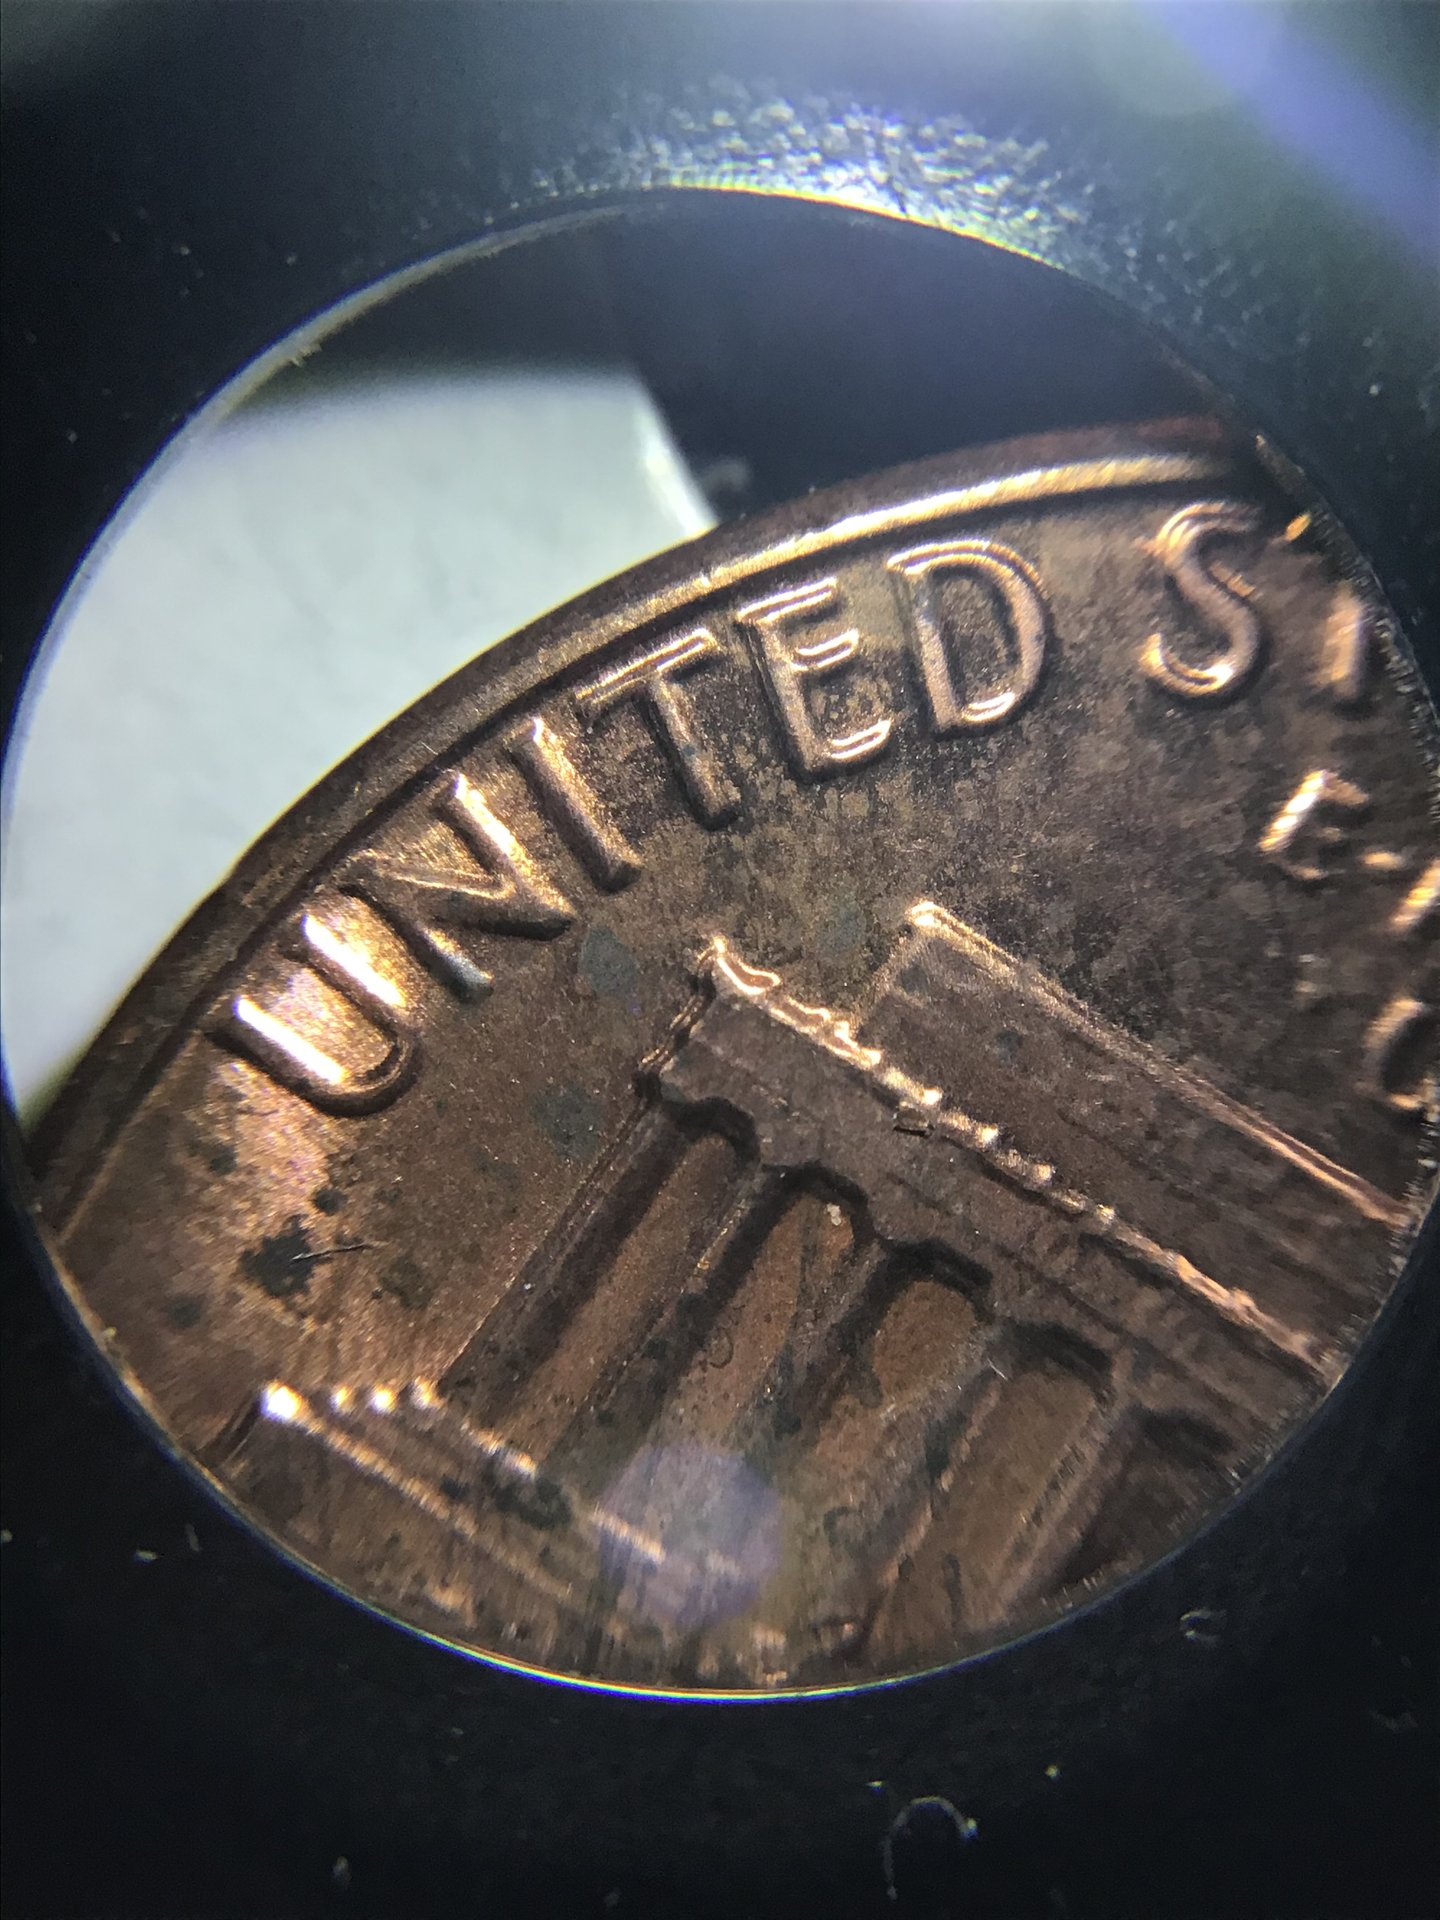 1985 P Lincoln cent DDR | Coin Talk